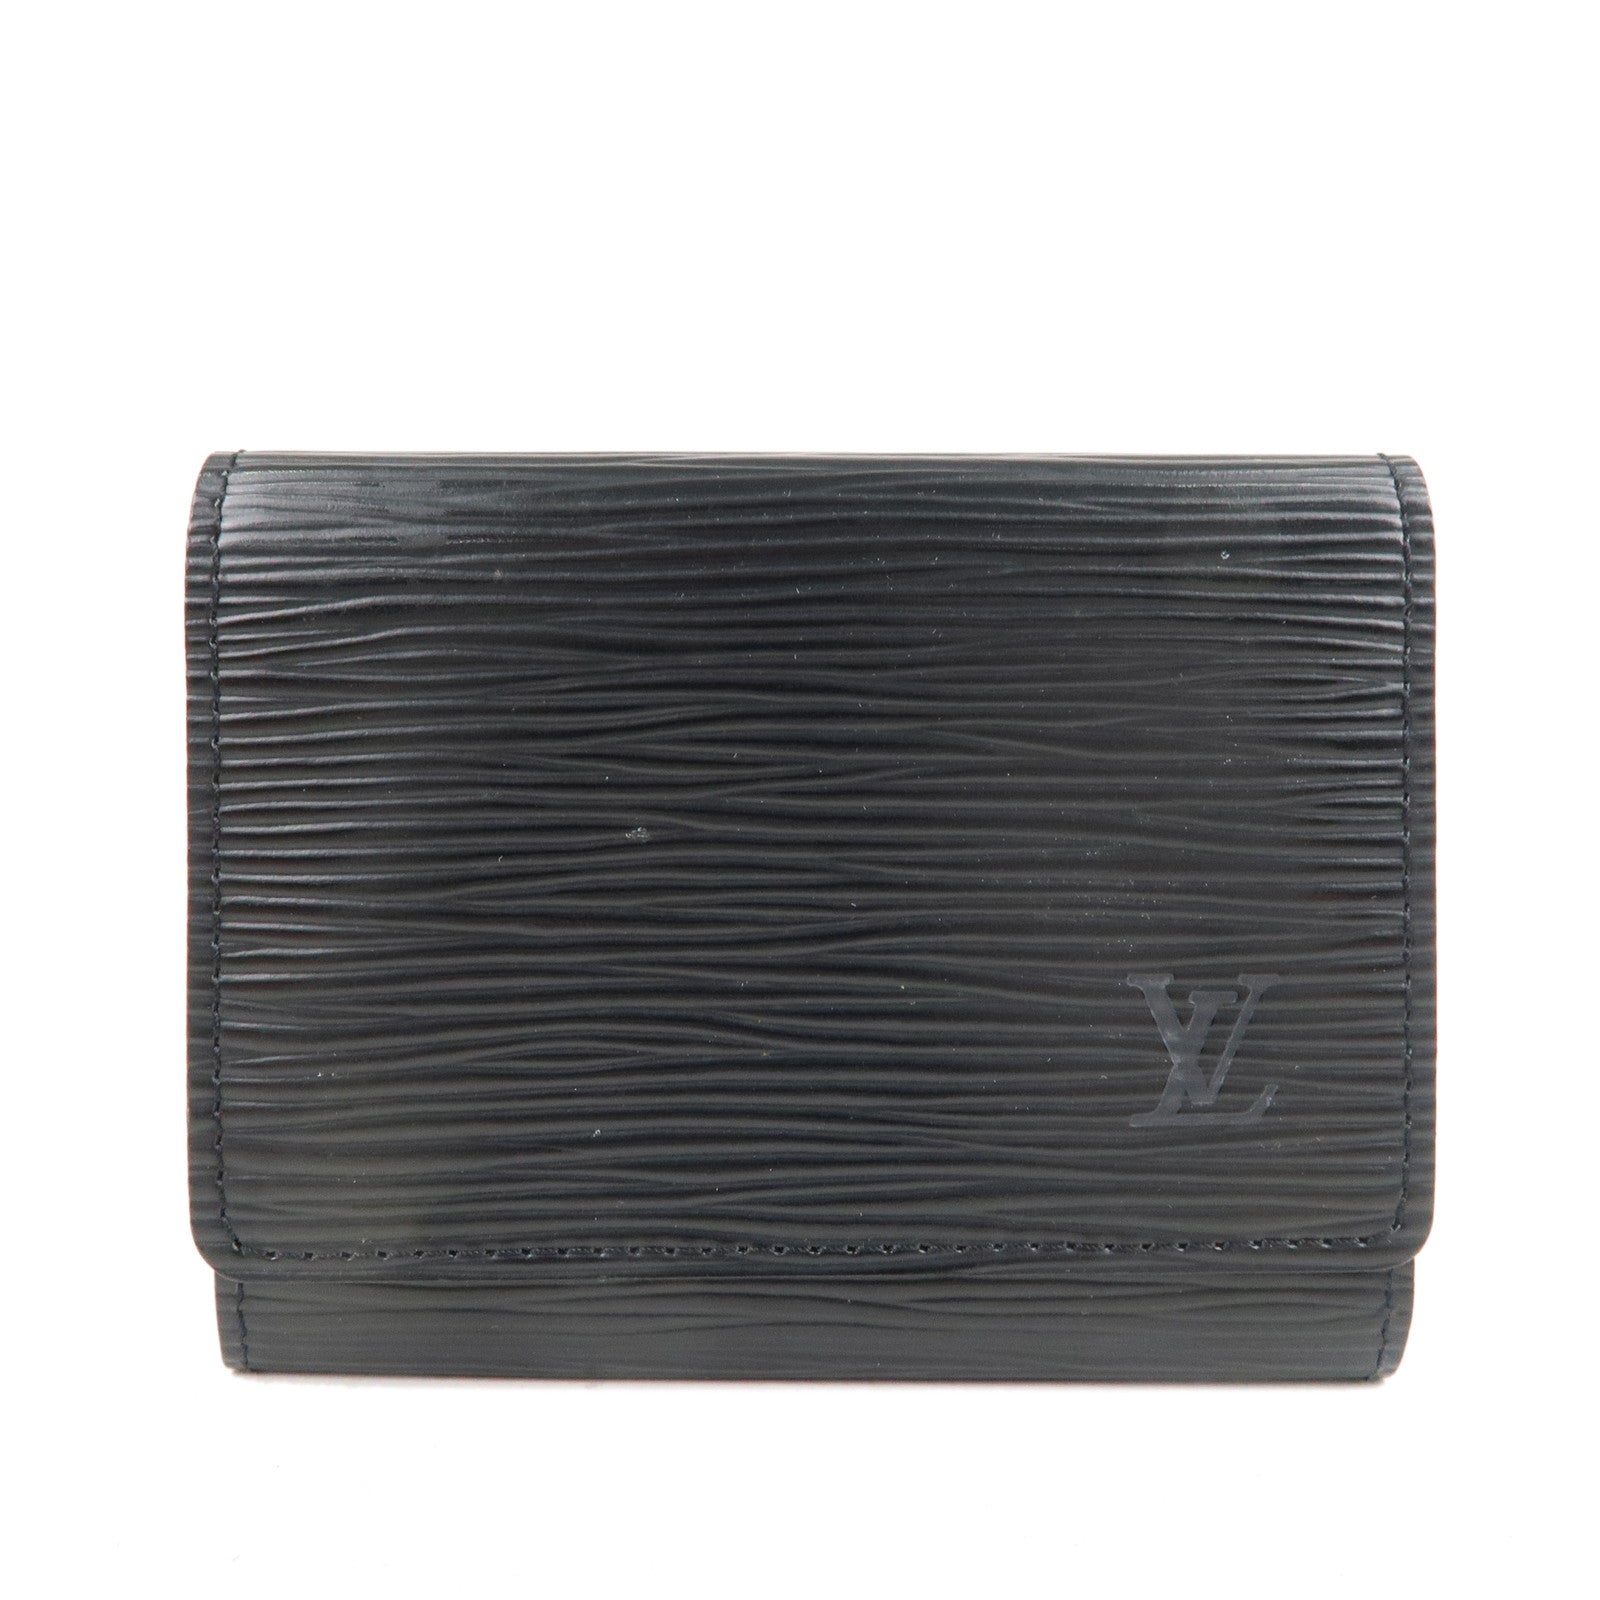 Louis Vuitton, Bags, Louis Vuitton Enveloppe Carte De Visite Wallet